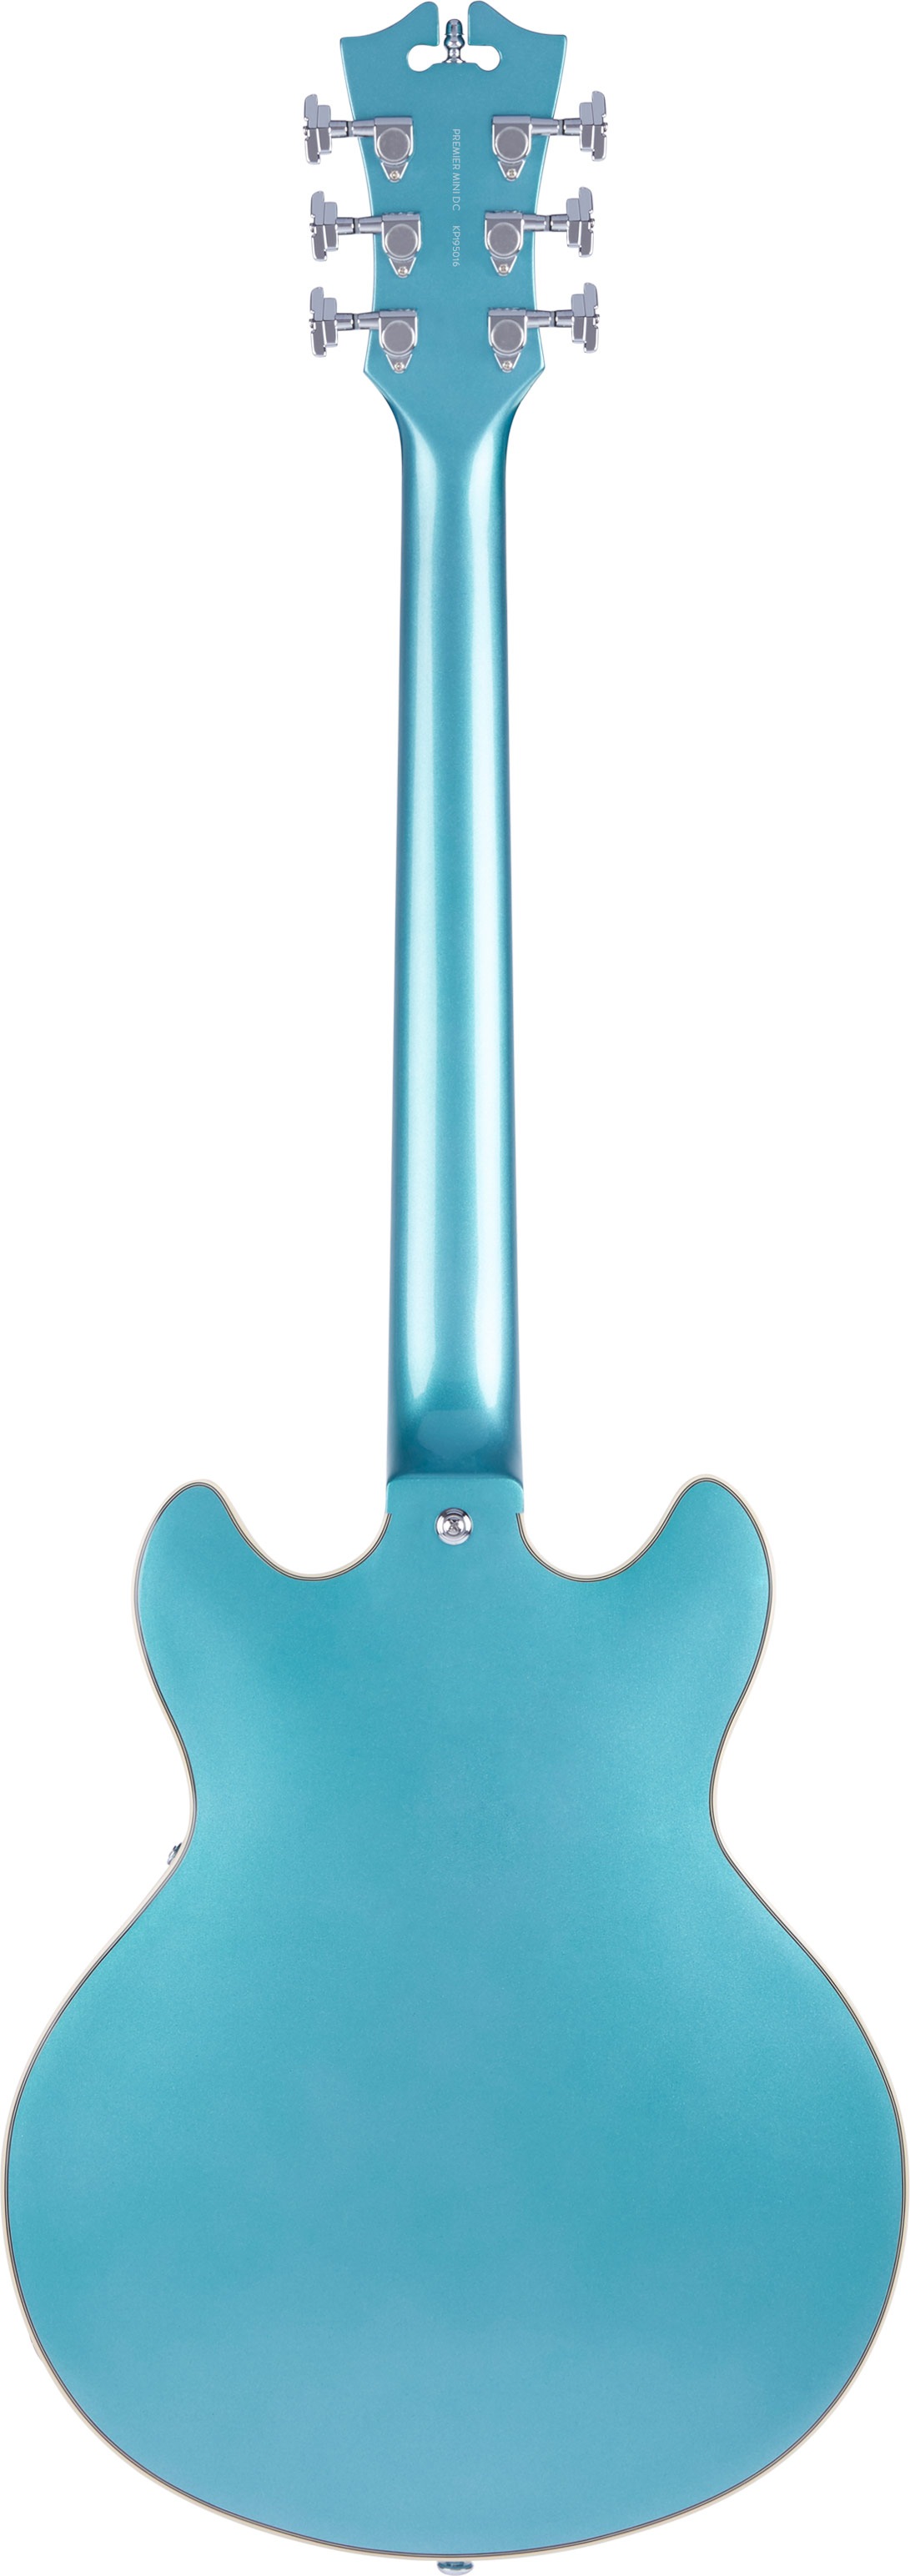 D'Angelico Premier Mini DC Stop-Bar Ocean Turquoise | guitarguitar